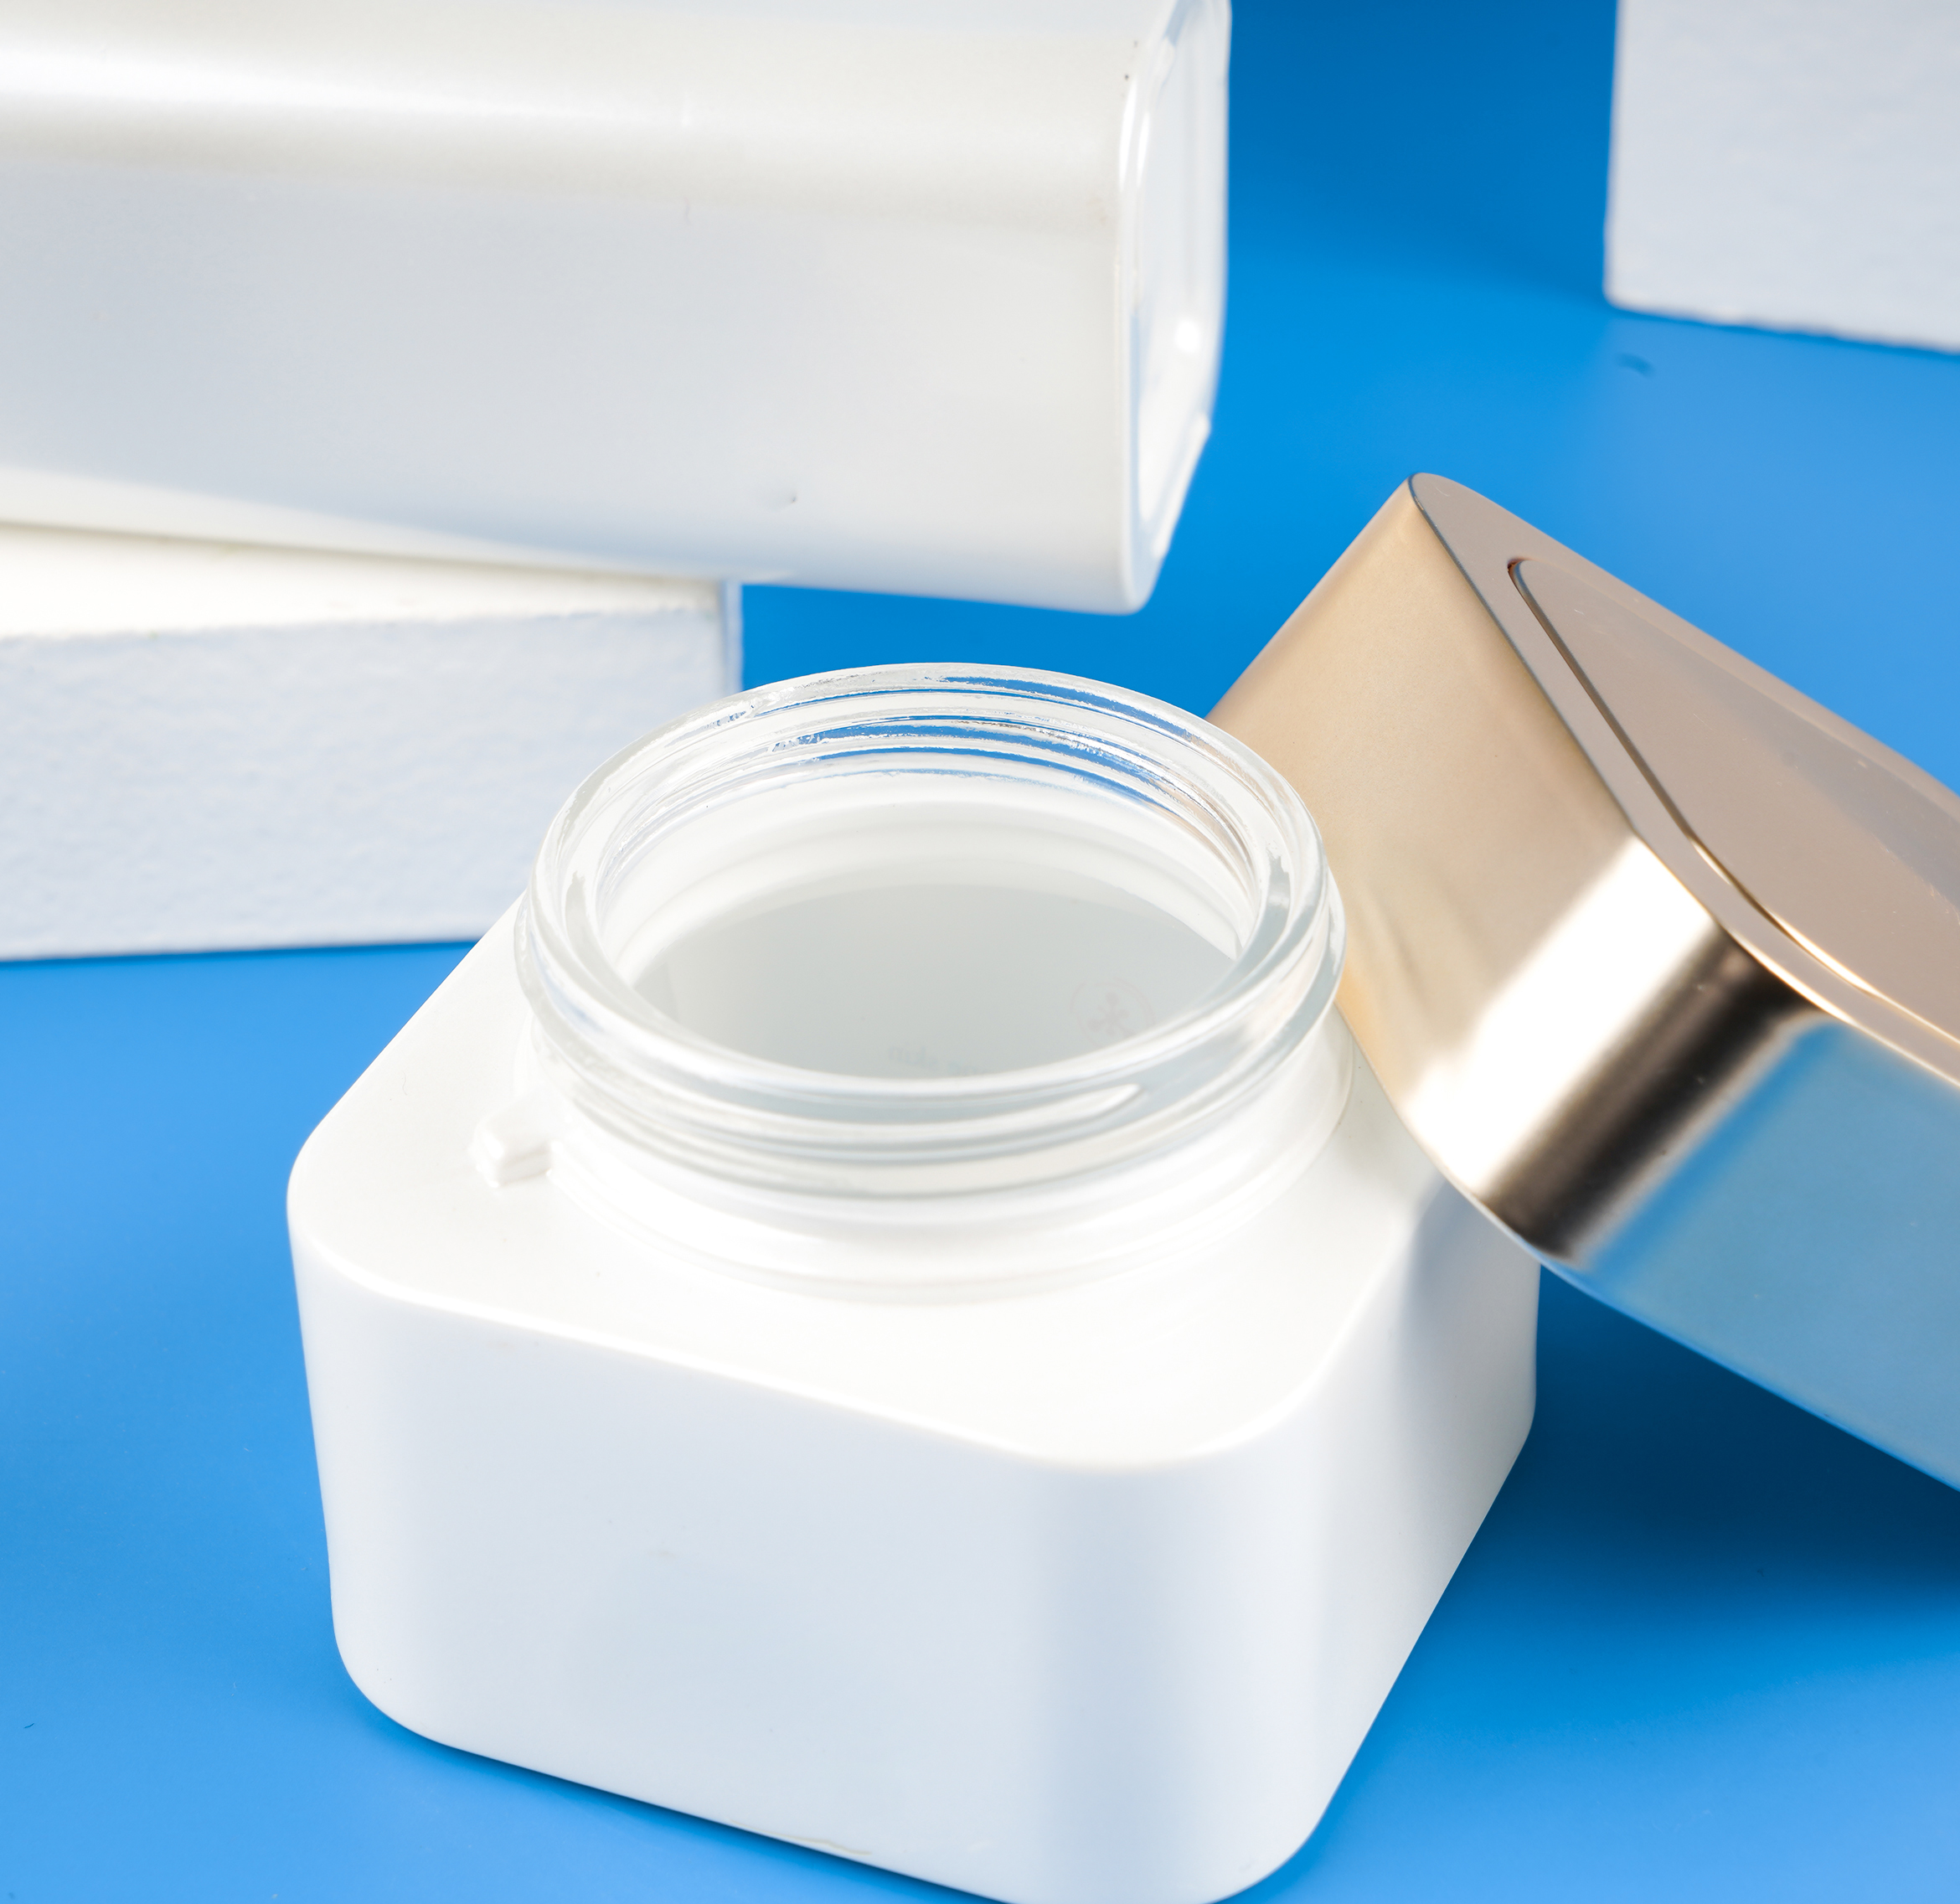 China Supplier Wholesale Custom Empty Cosmetic Cream Jar